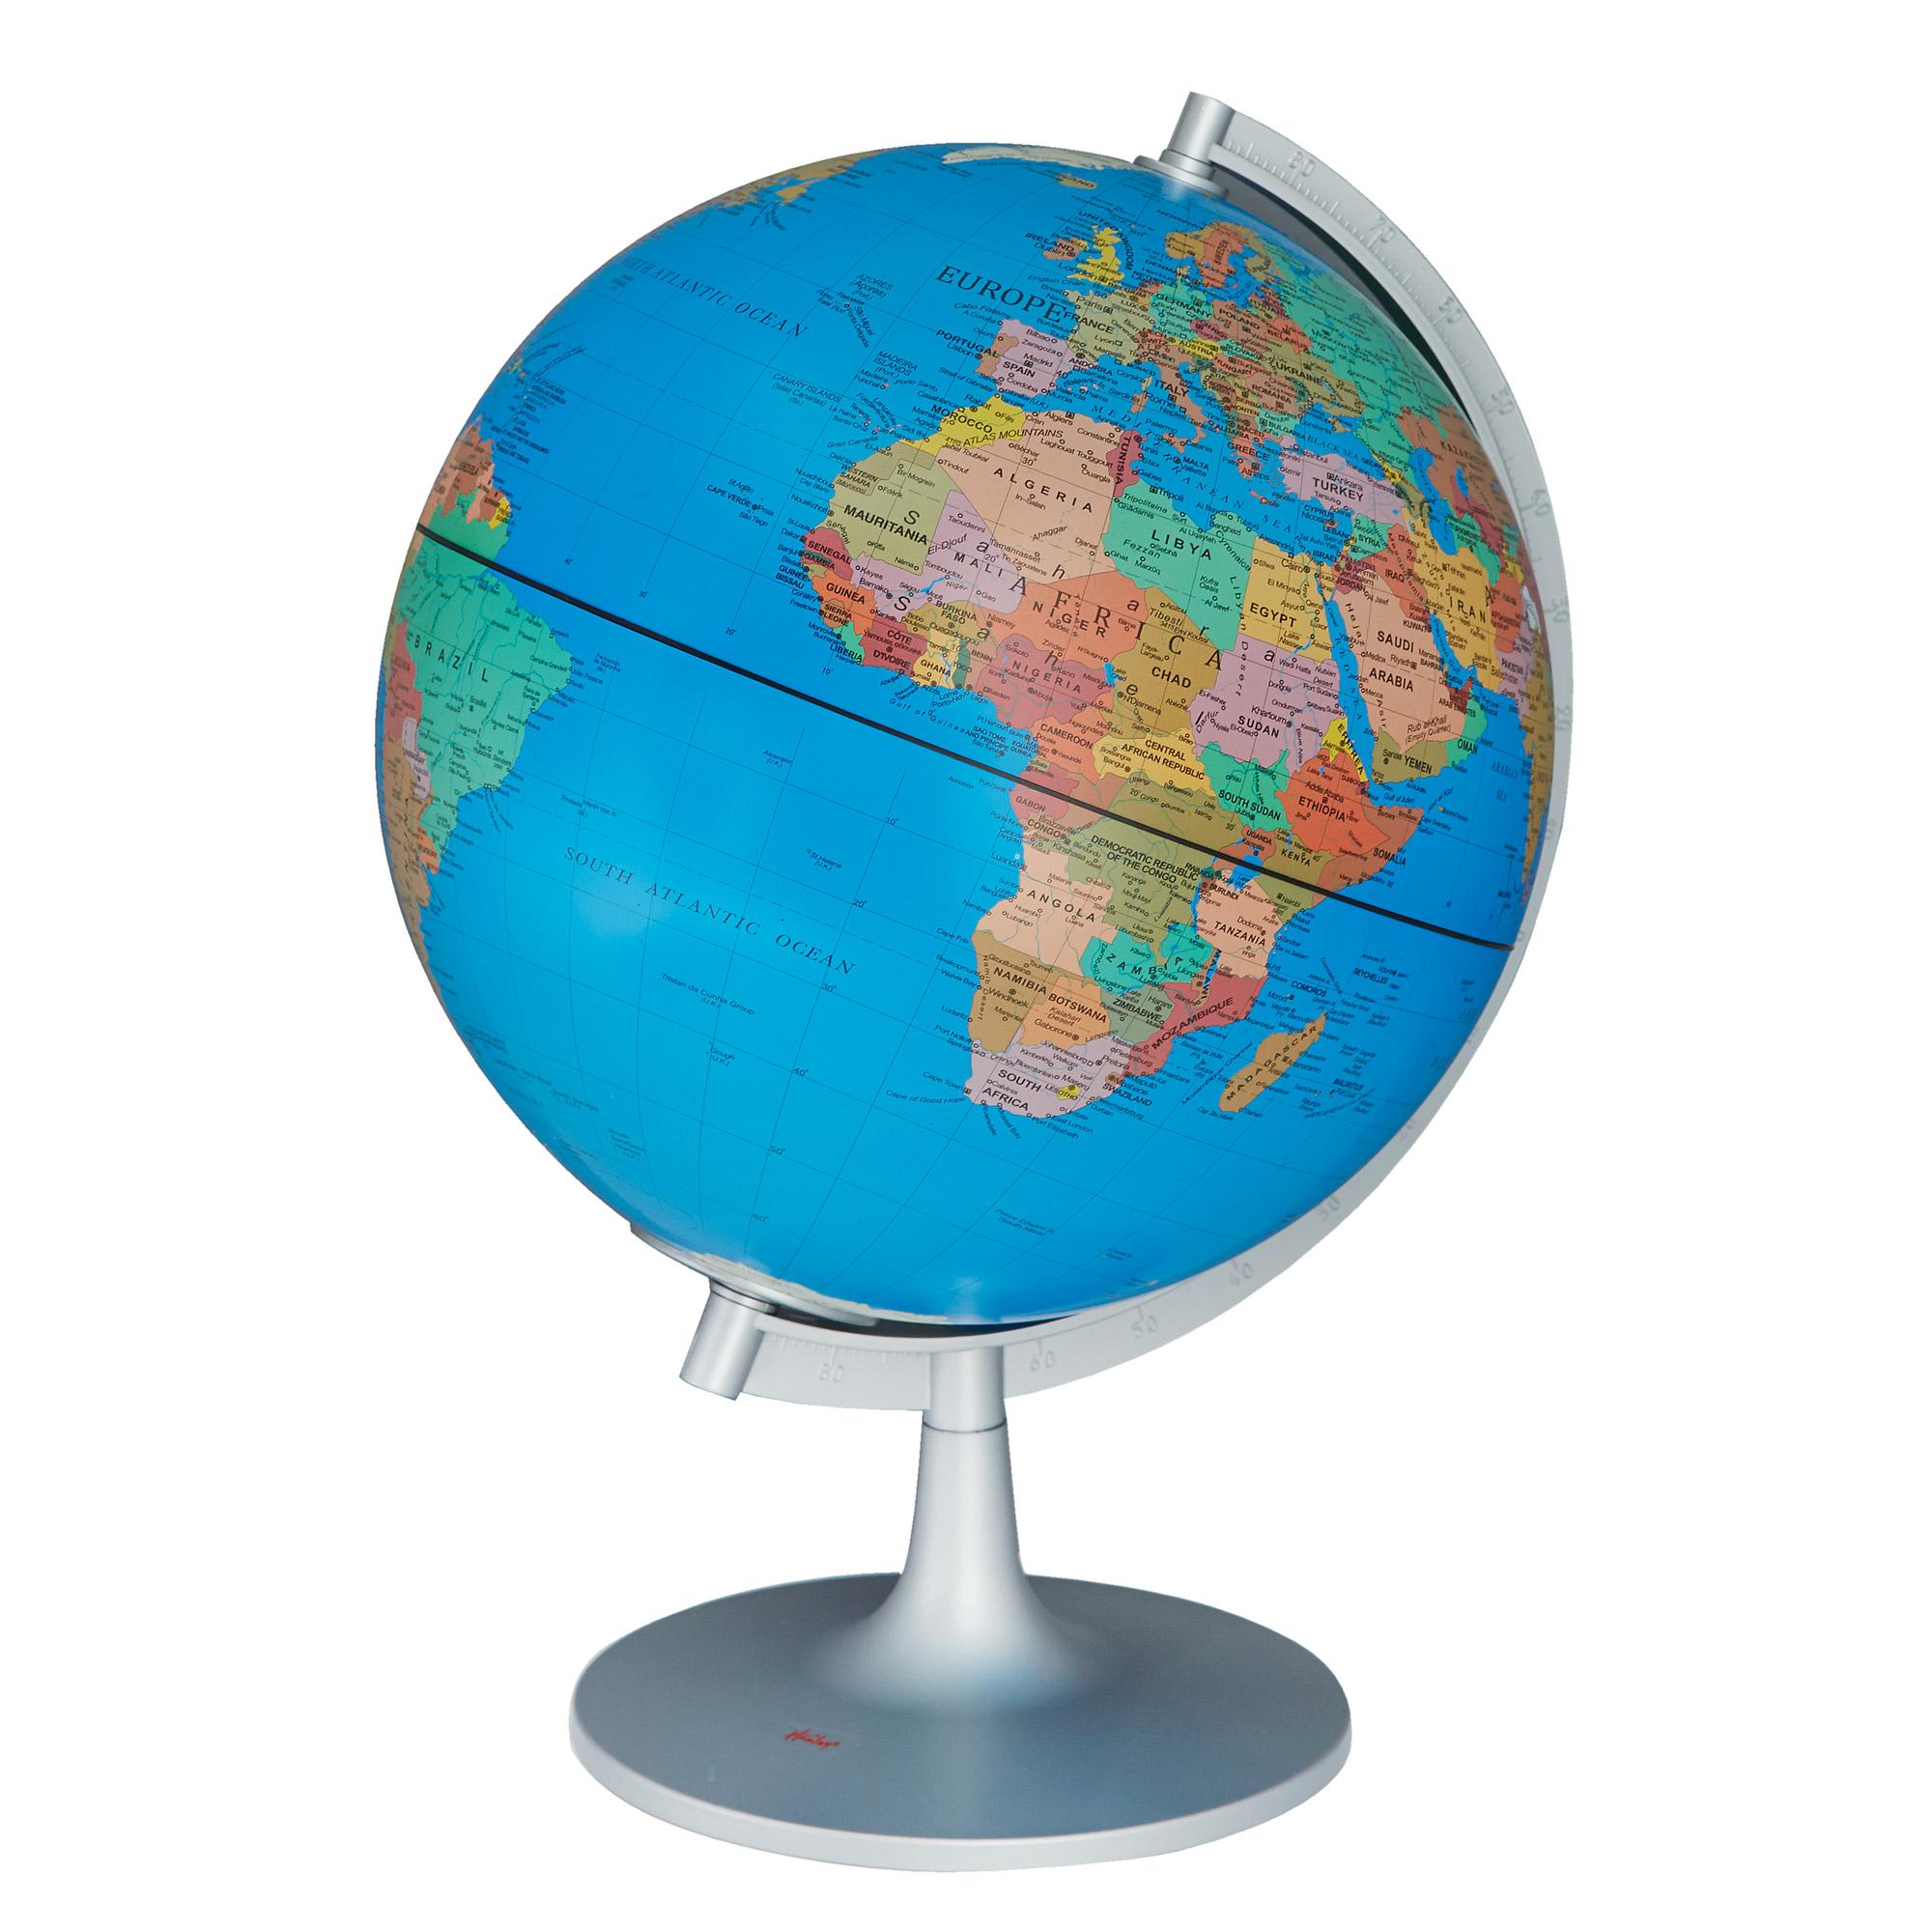 Hamleys World Globe - £26.00 - Hamleys for Toys and Games